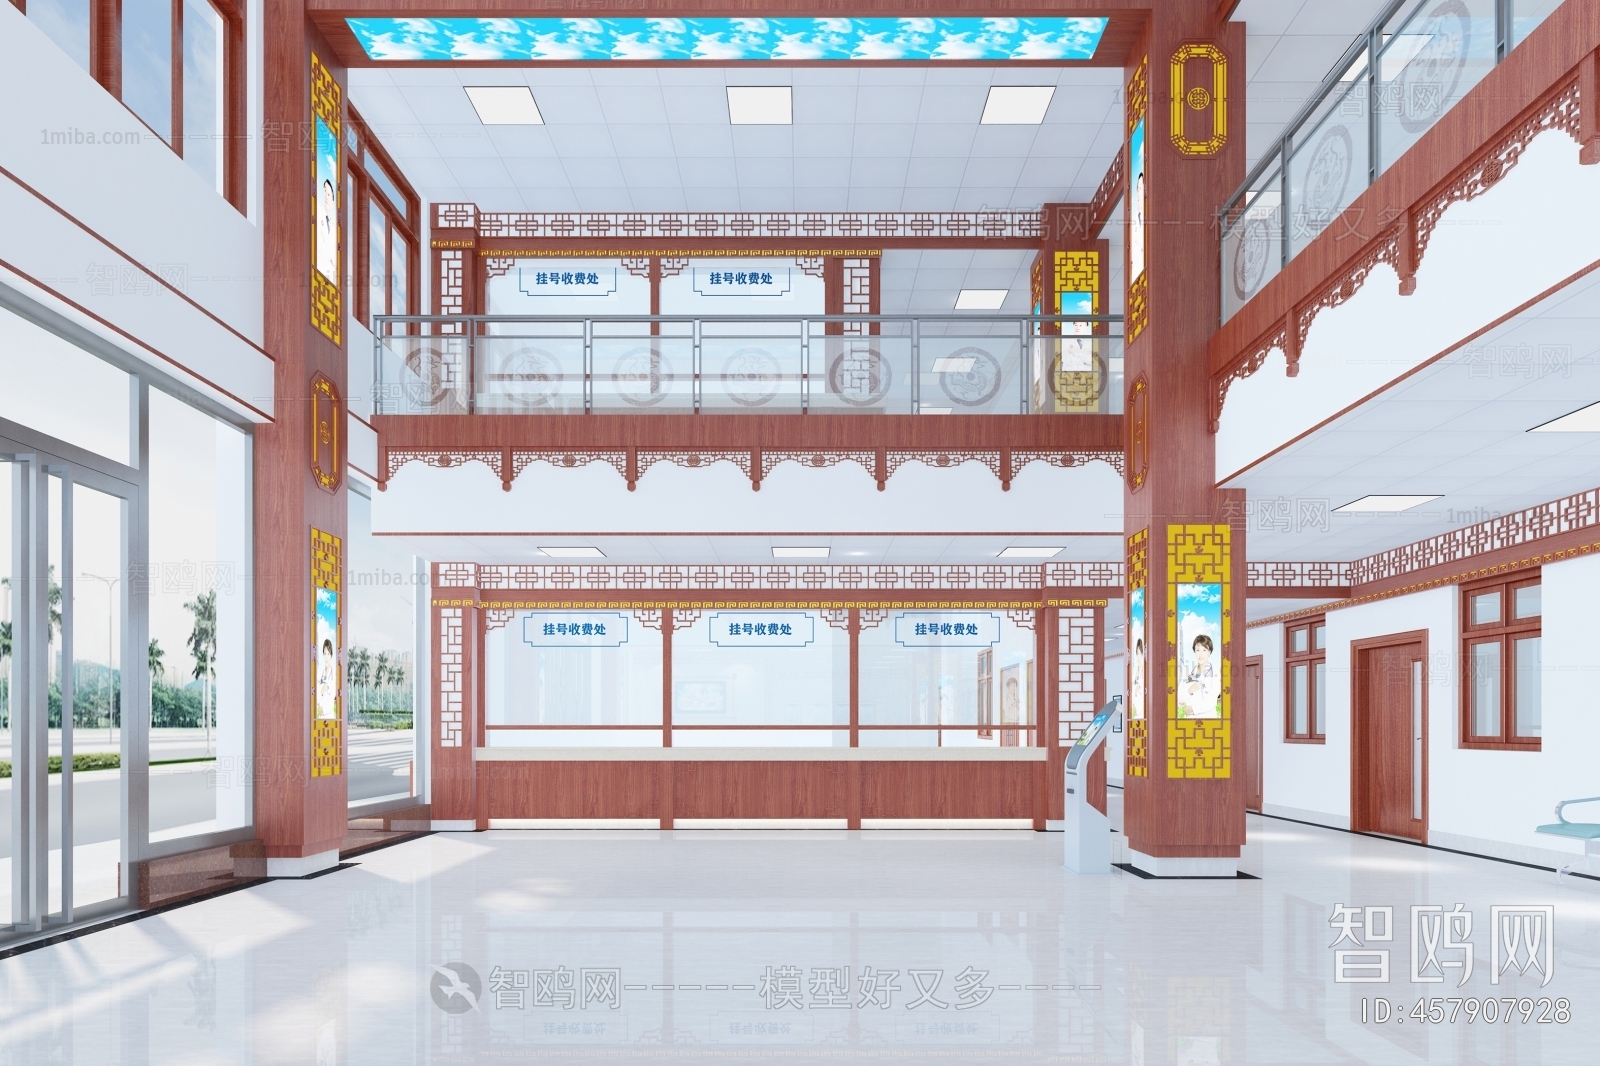 New Chinese Style Hospital